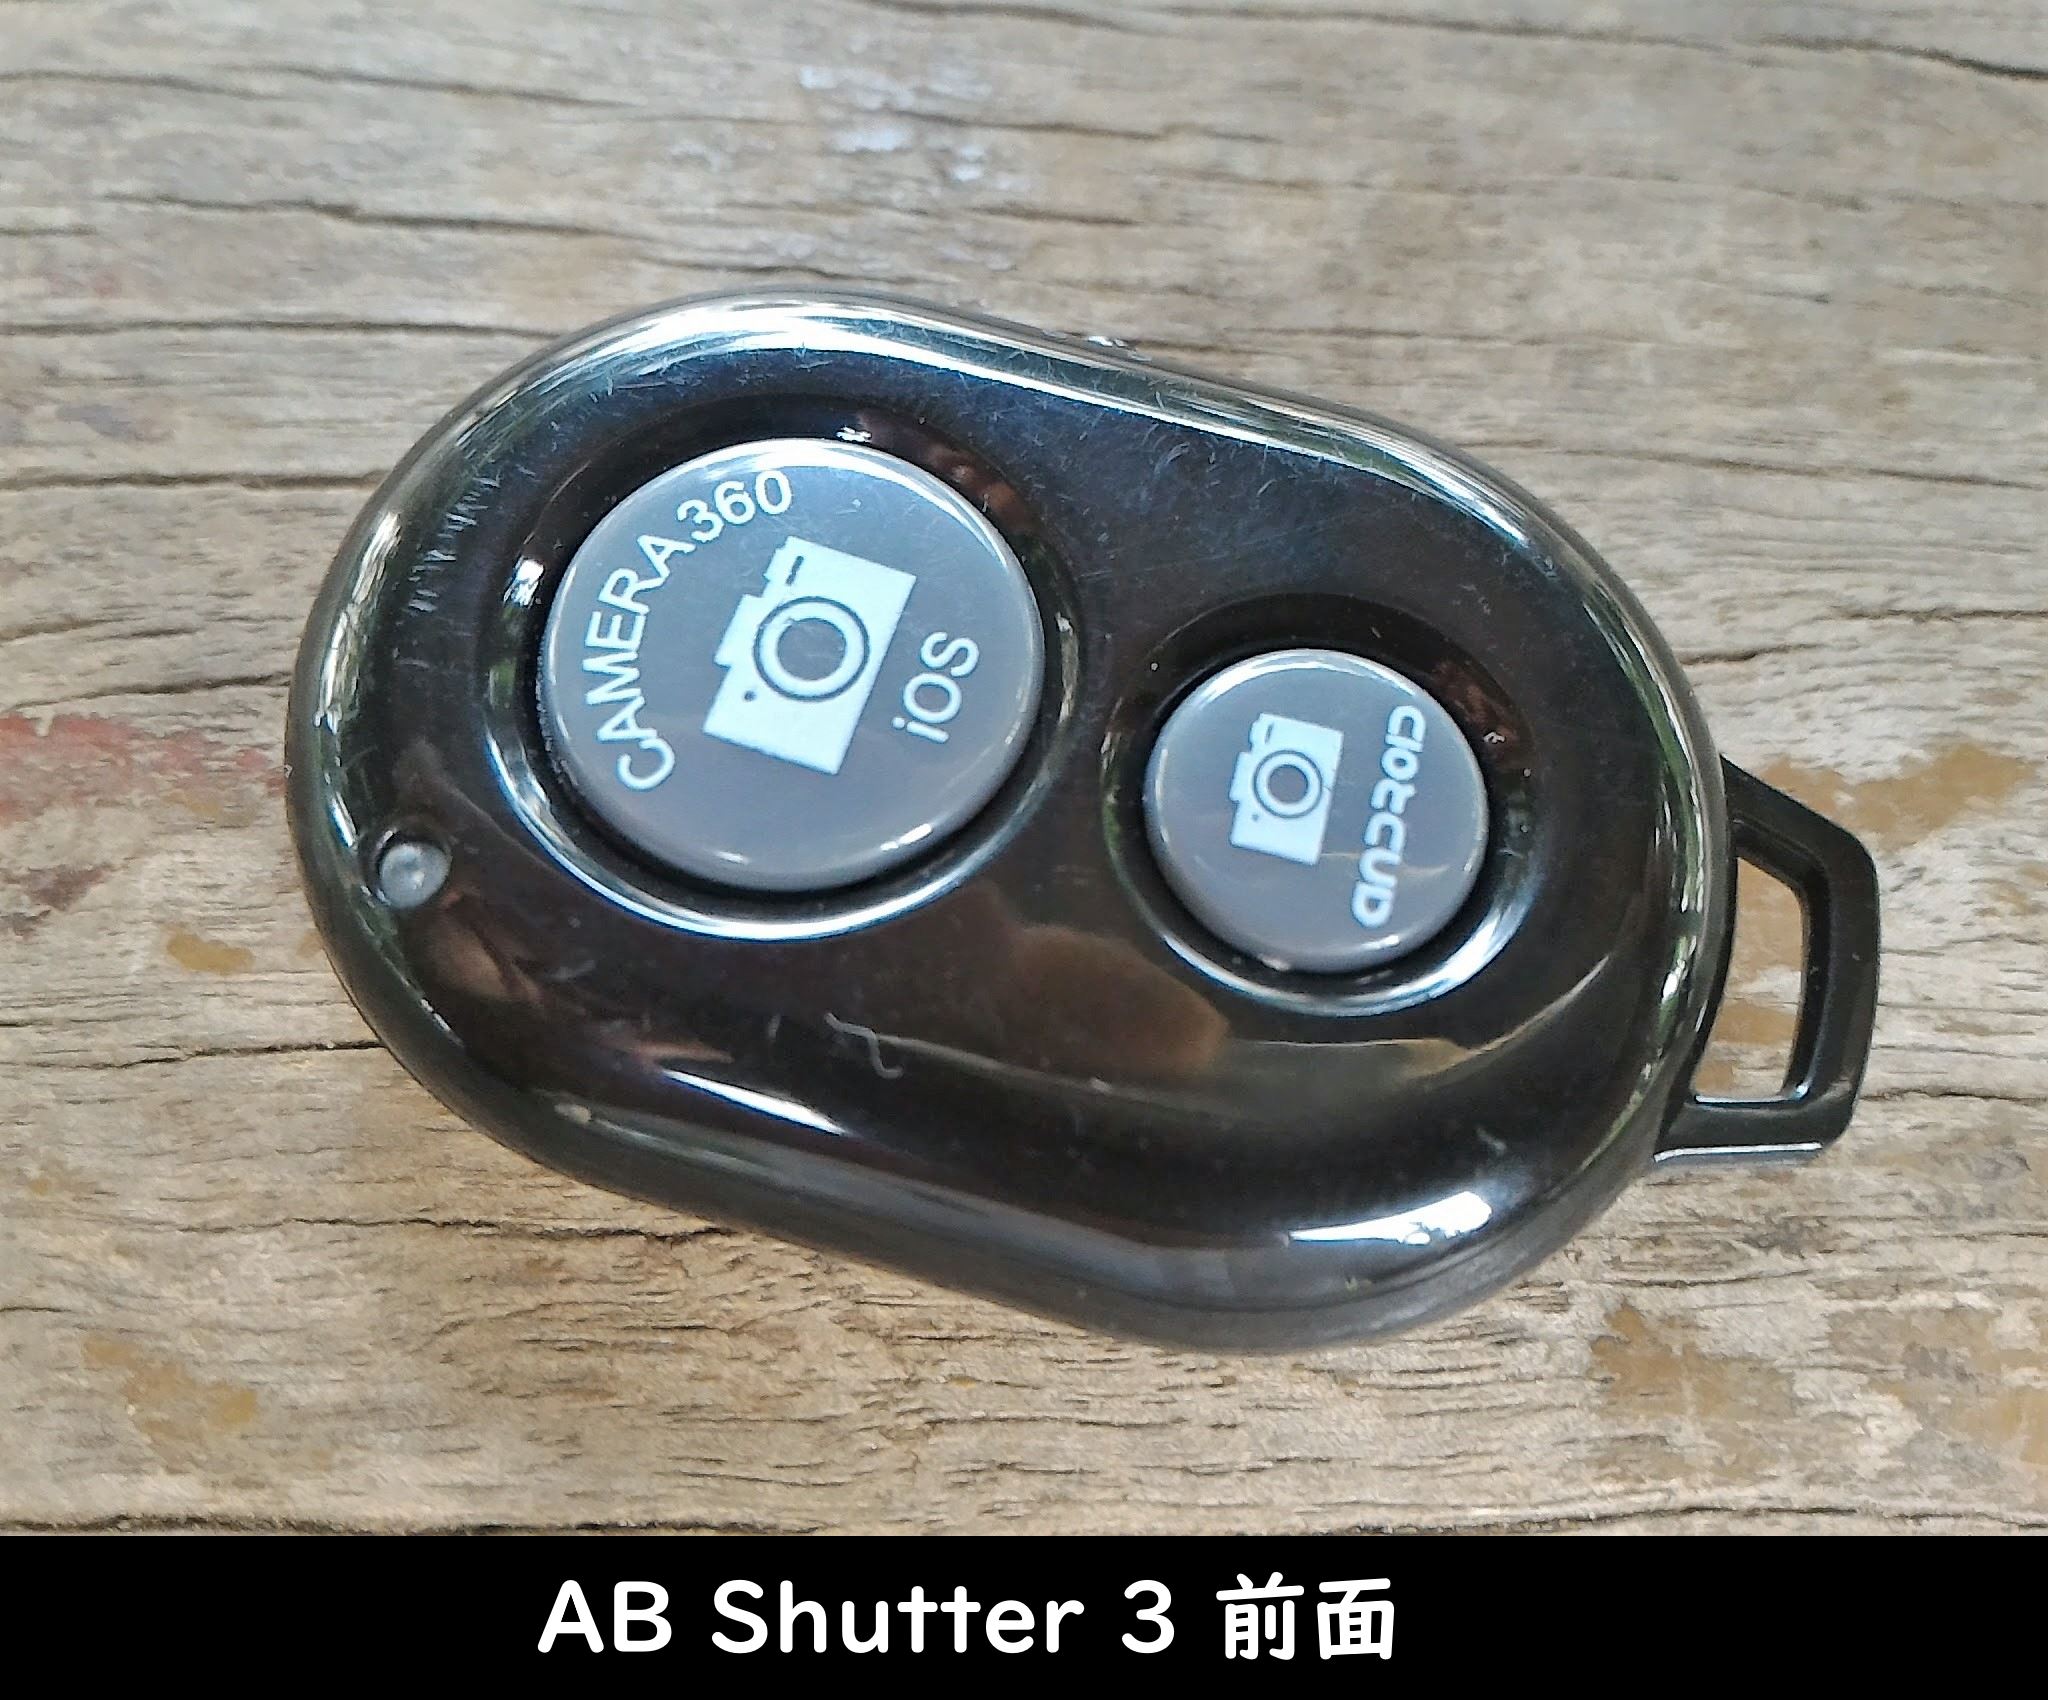 AB Shutter 3 (Bluetooth Remote Shutter) 前面